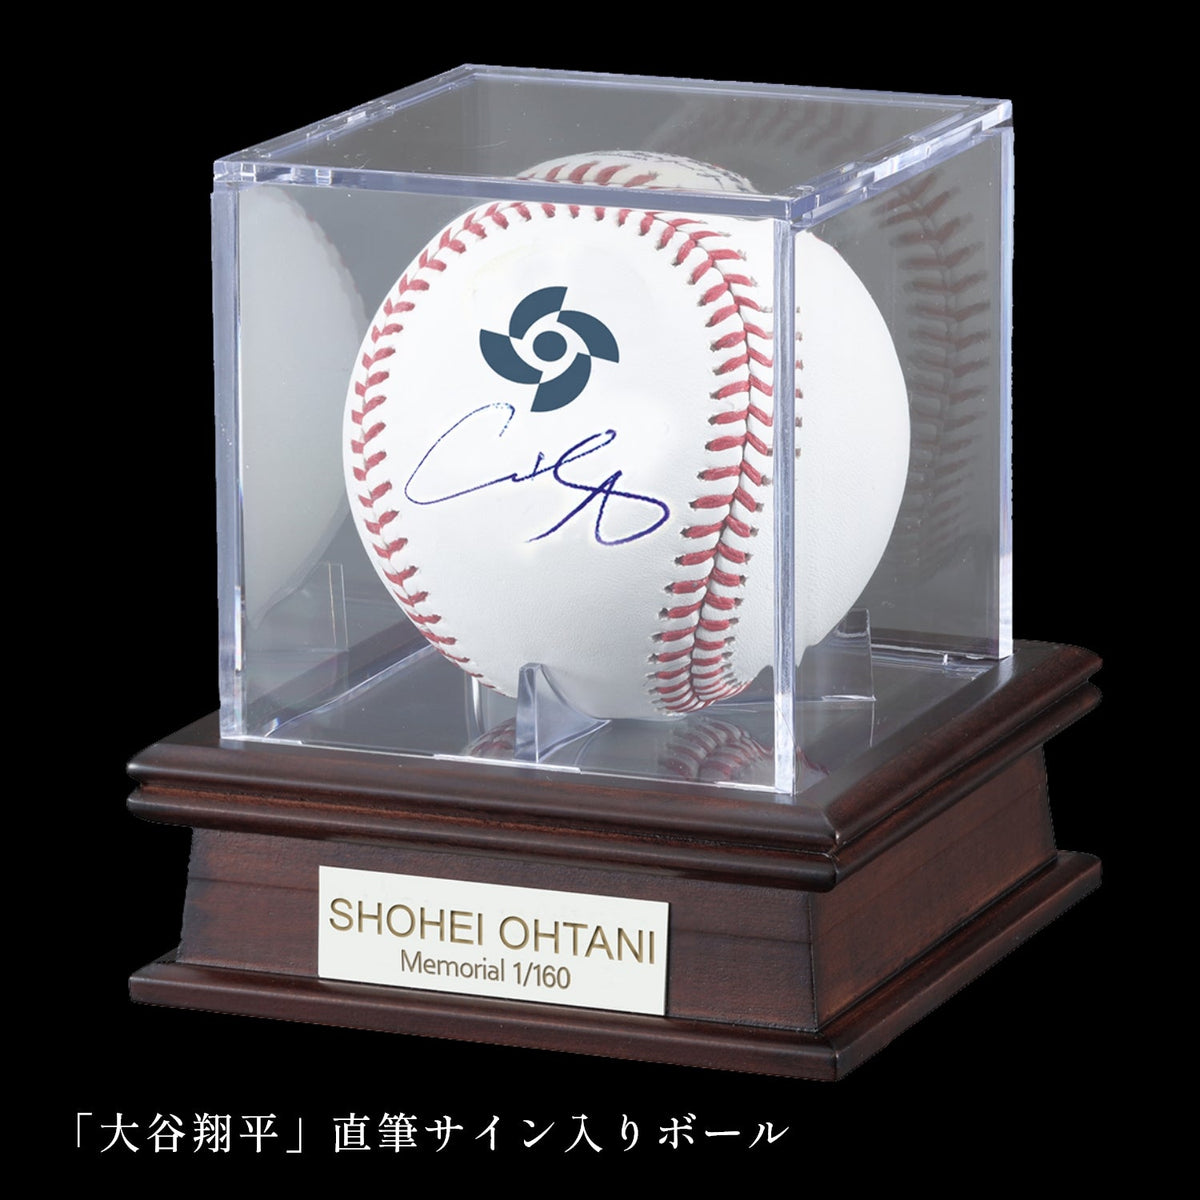 MLB WORLD BASEBALL CLASSIC 2023 Shohei Otani Autographed WBC Official Ball